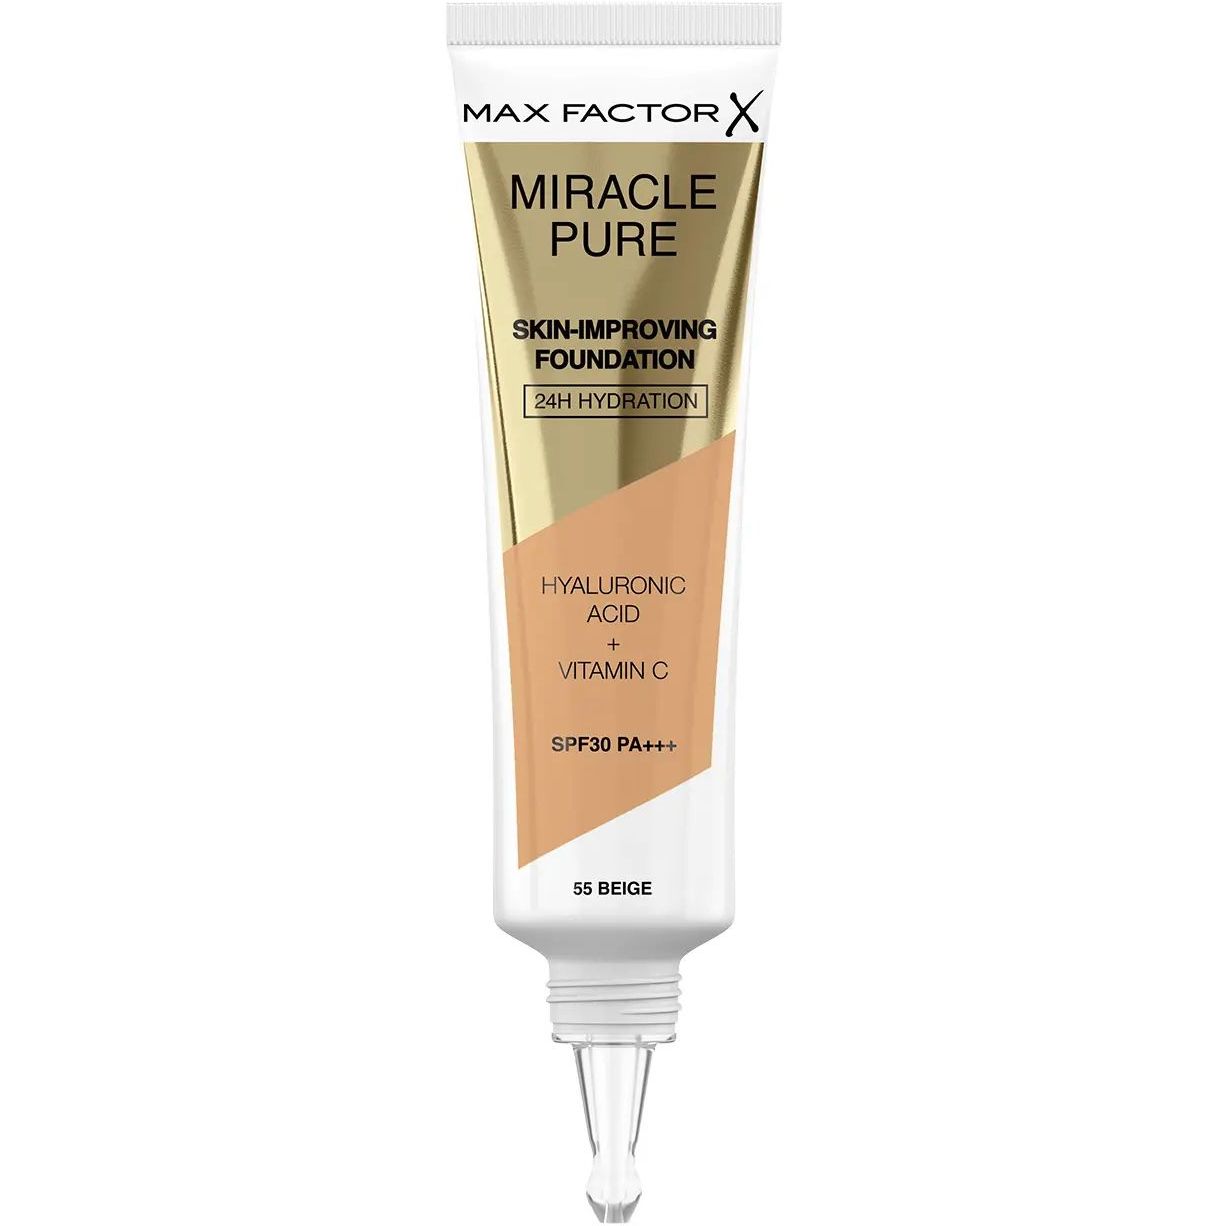 Тональная основа Max Factor Miracle Pure Skin-Improving Foundation SPF30 тон 055 (Beige) 30 мл - фото 2